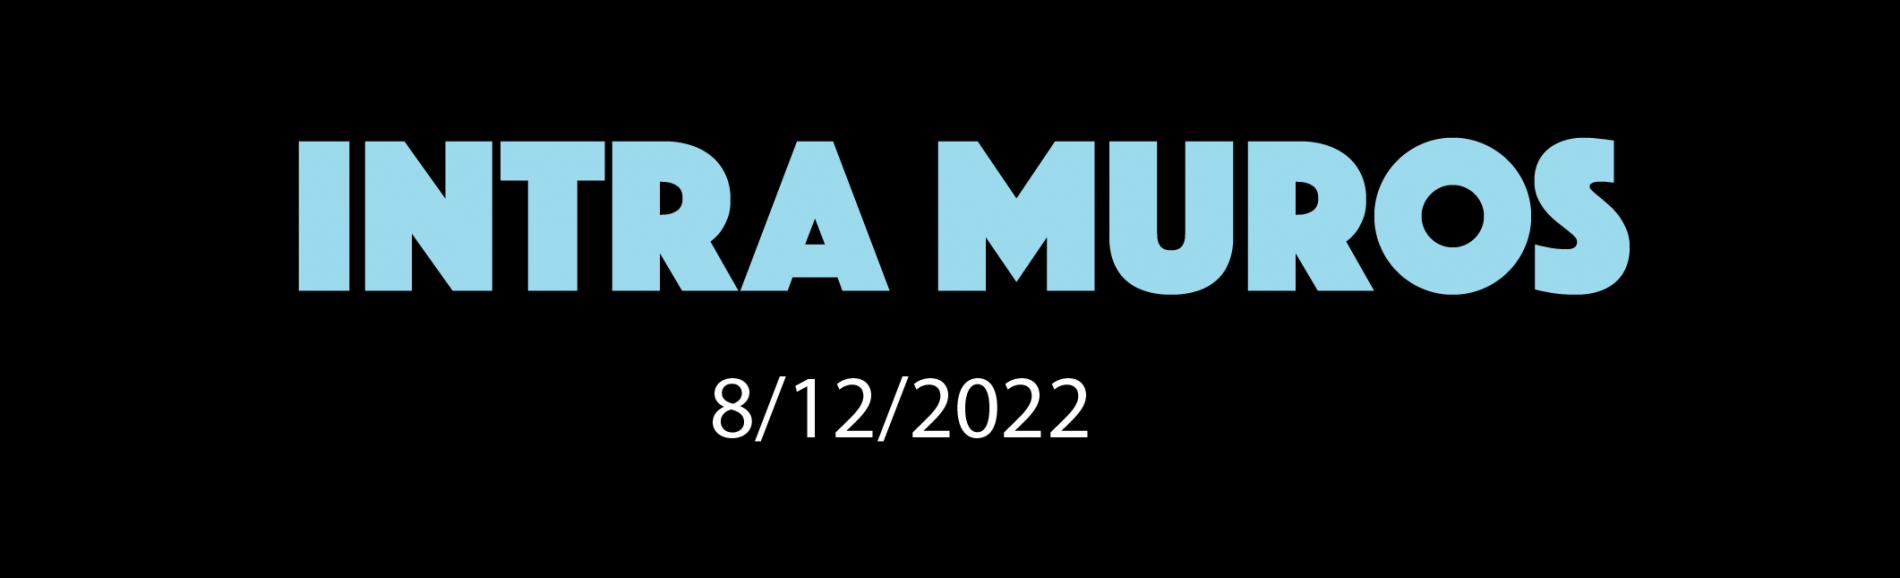 INTRA MUROS 8/12/2022